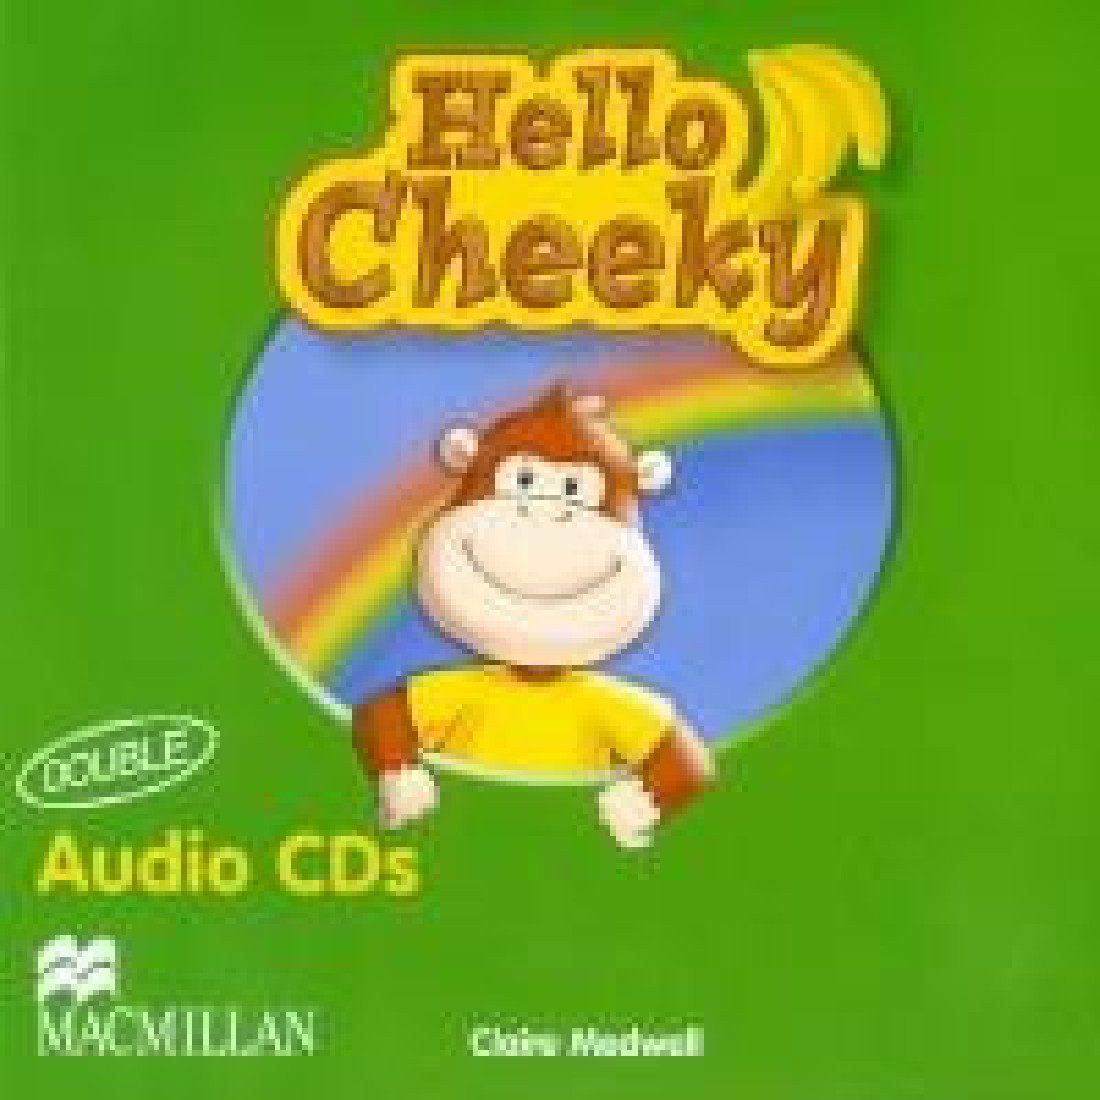 HELLO CHEEKY CDs (2)